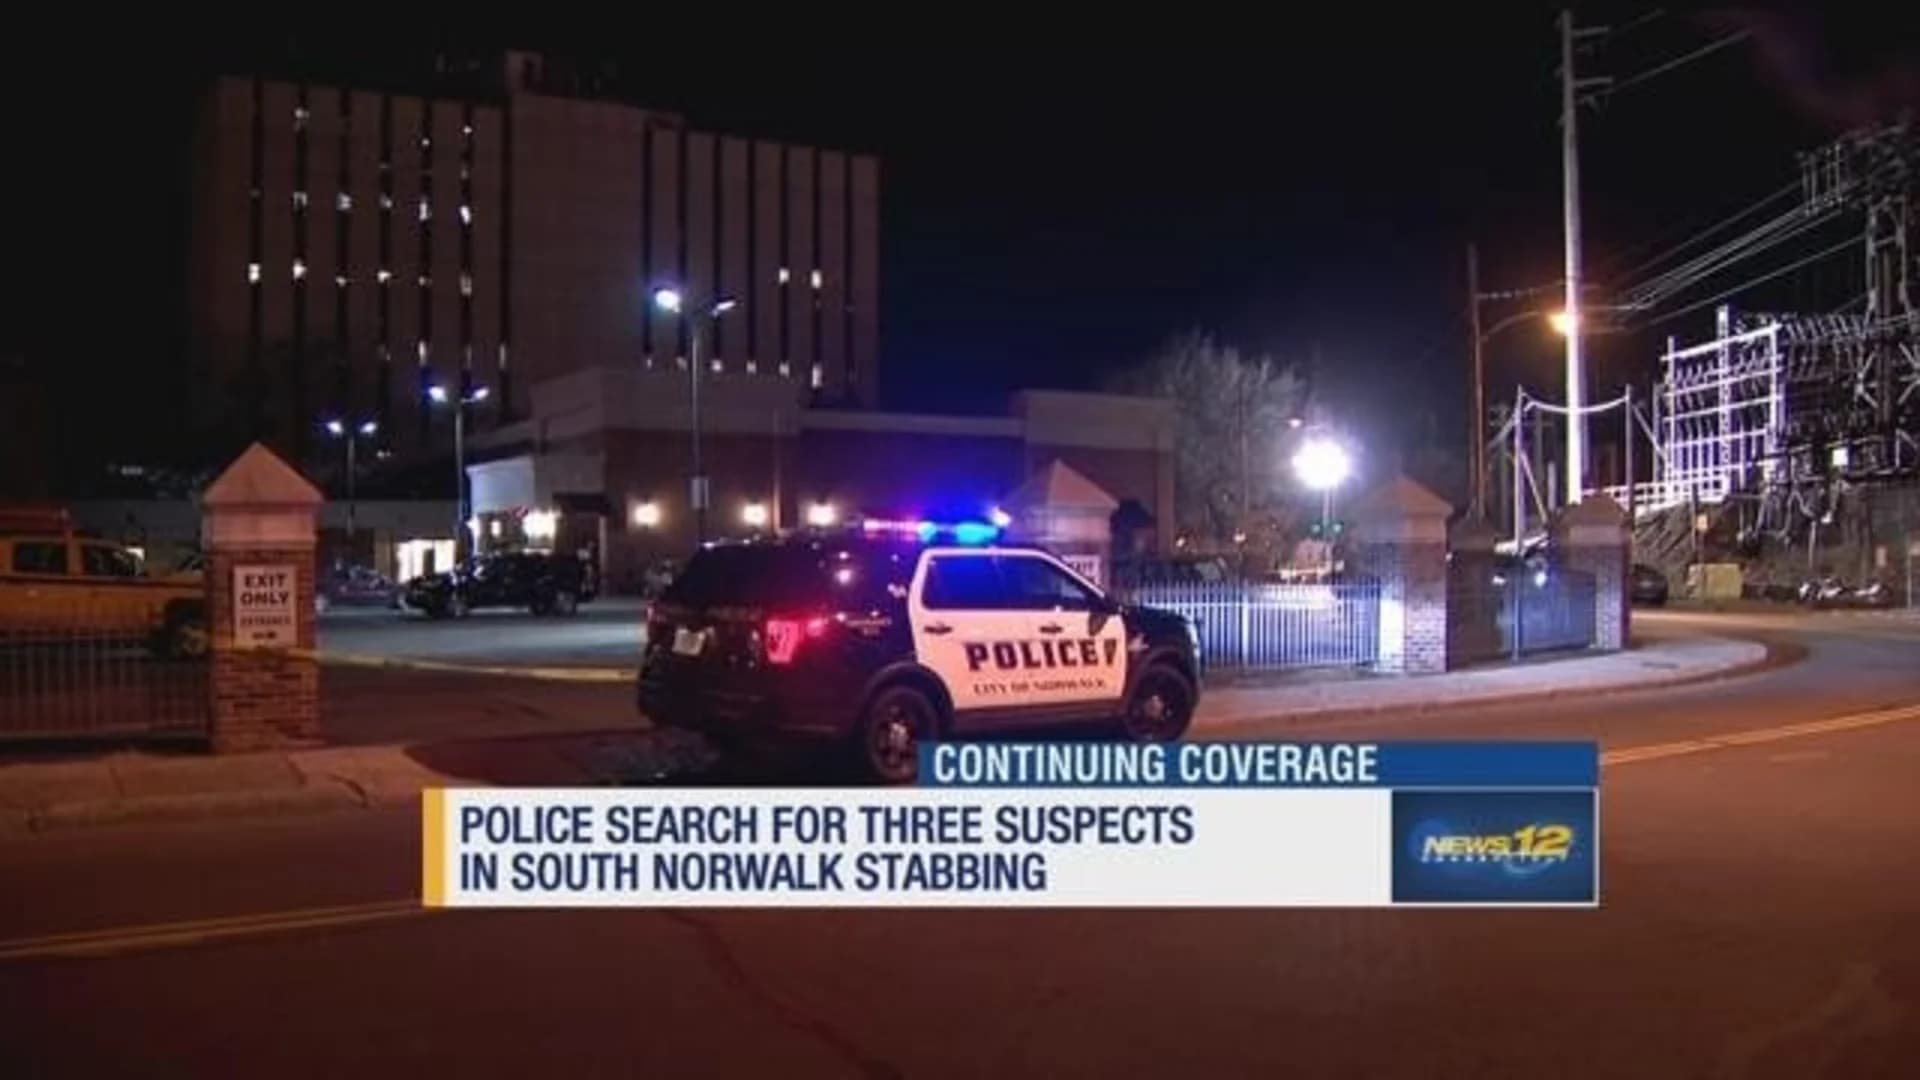 Police seek public’s help in finding 3 suspects in South Norwalk stabbing